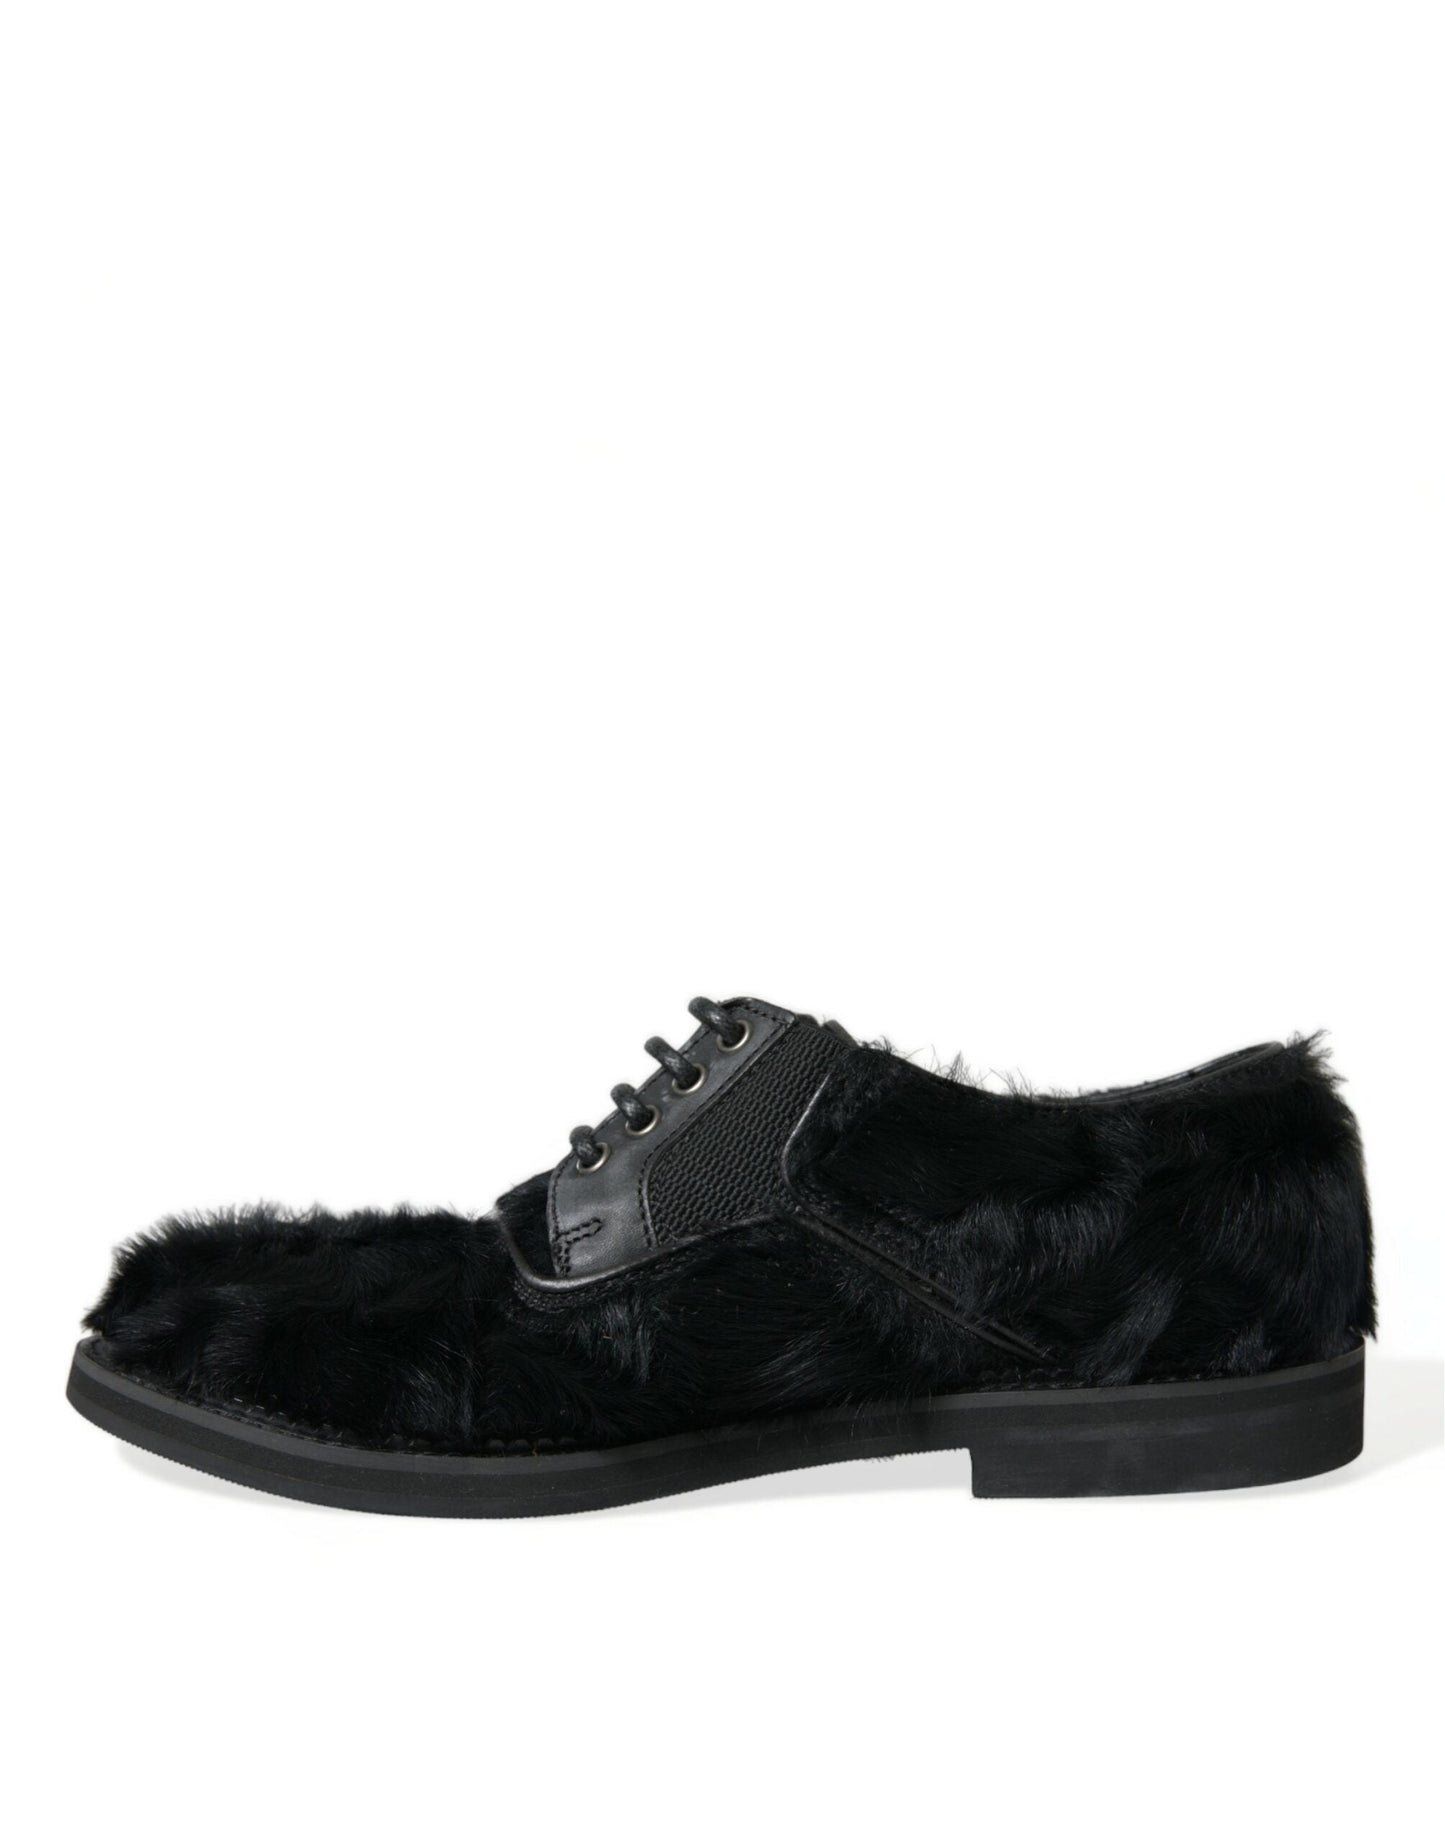 Dolce & Gabbana Black Fur Leather Lace Up Derby Dress Shoes | Fashionsarah.com